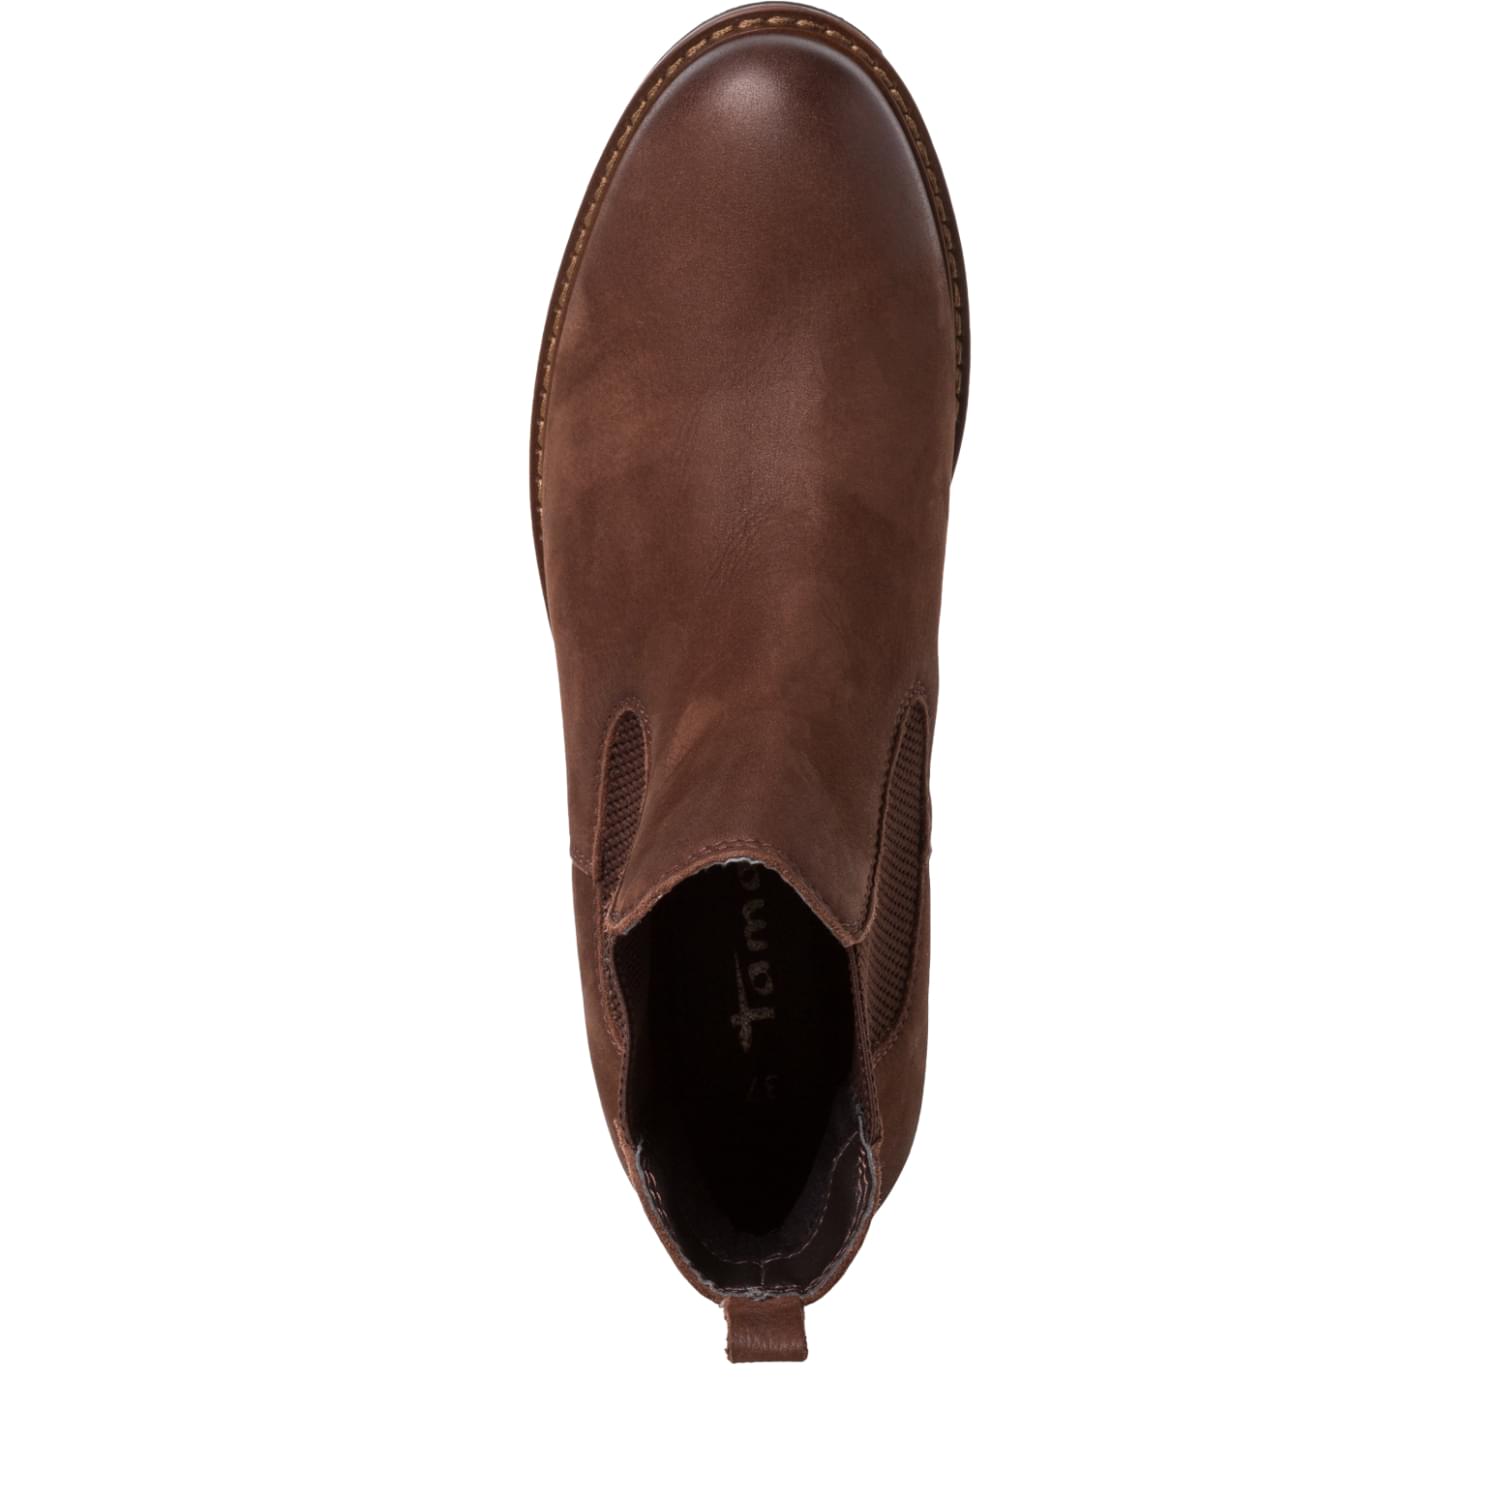 Tamaris Belin Chelsea Boots 1-1-25056-29 in Chocolate Nub.